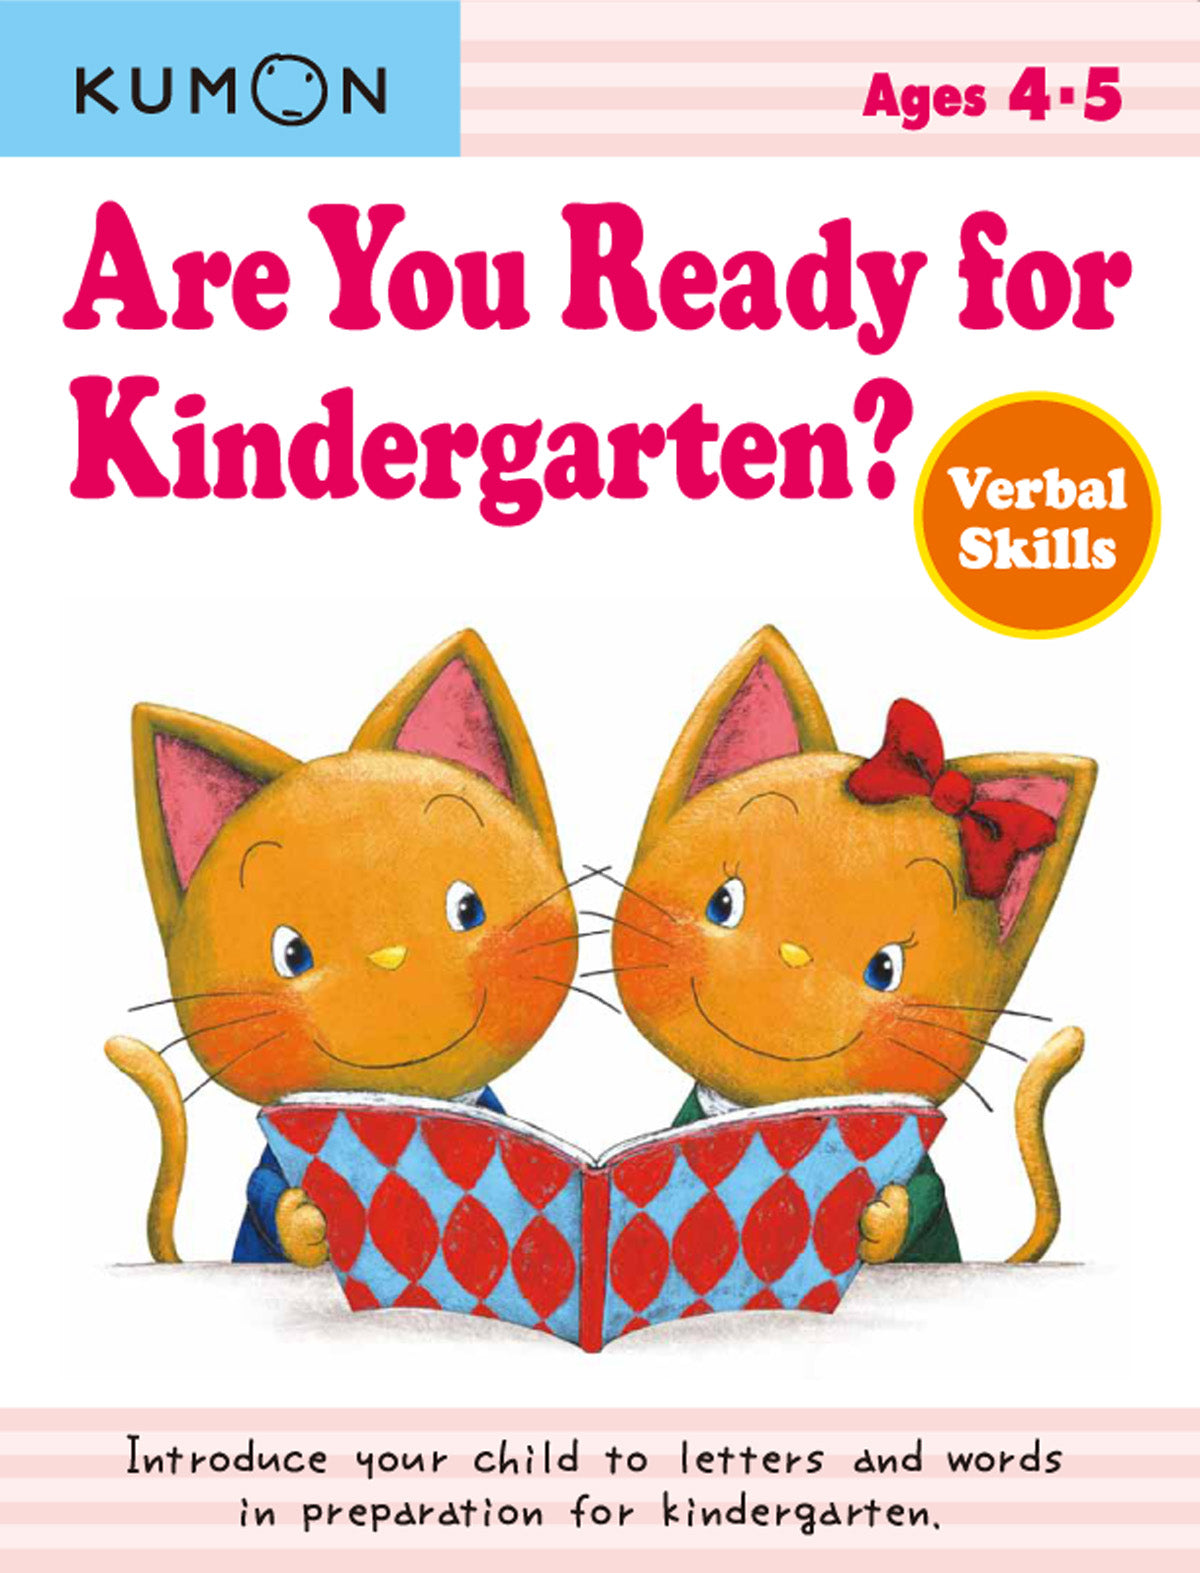 Kumon Are You Ready For Kindergarten? Verbal Skills